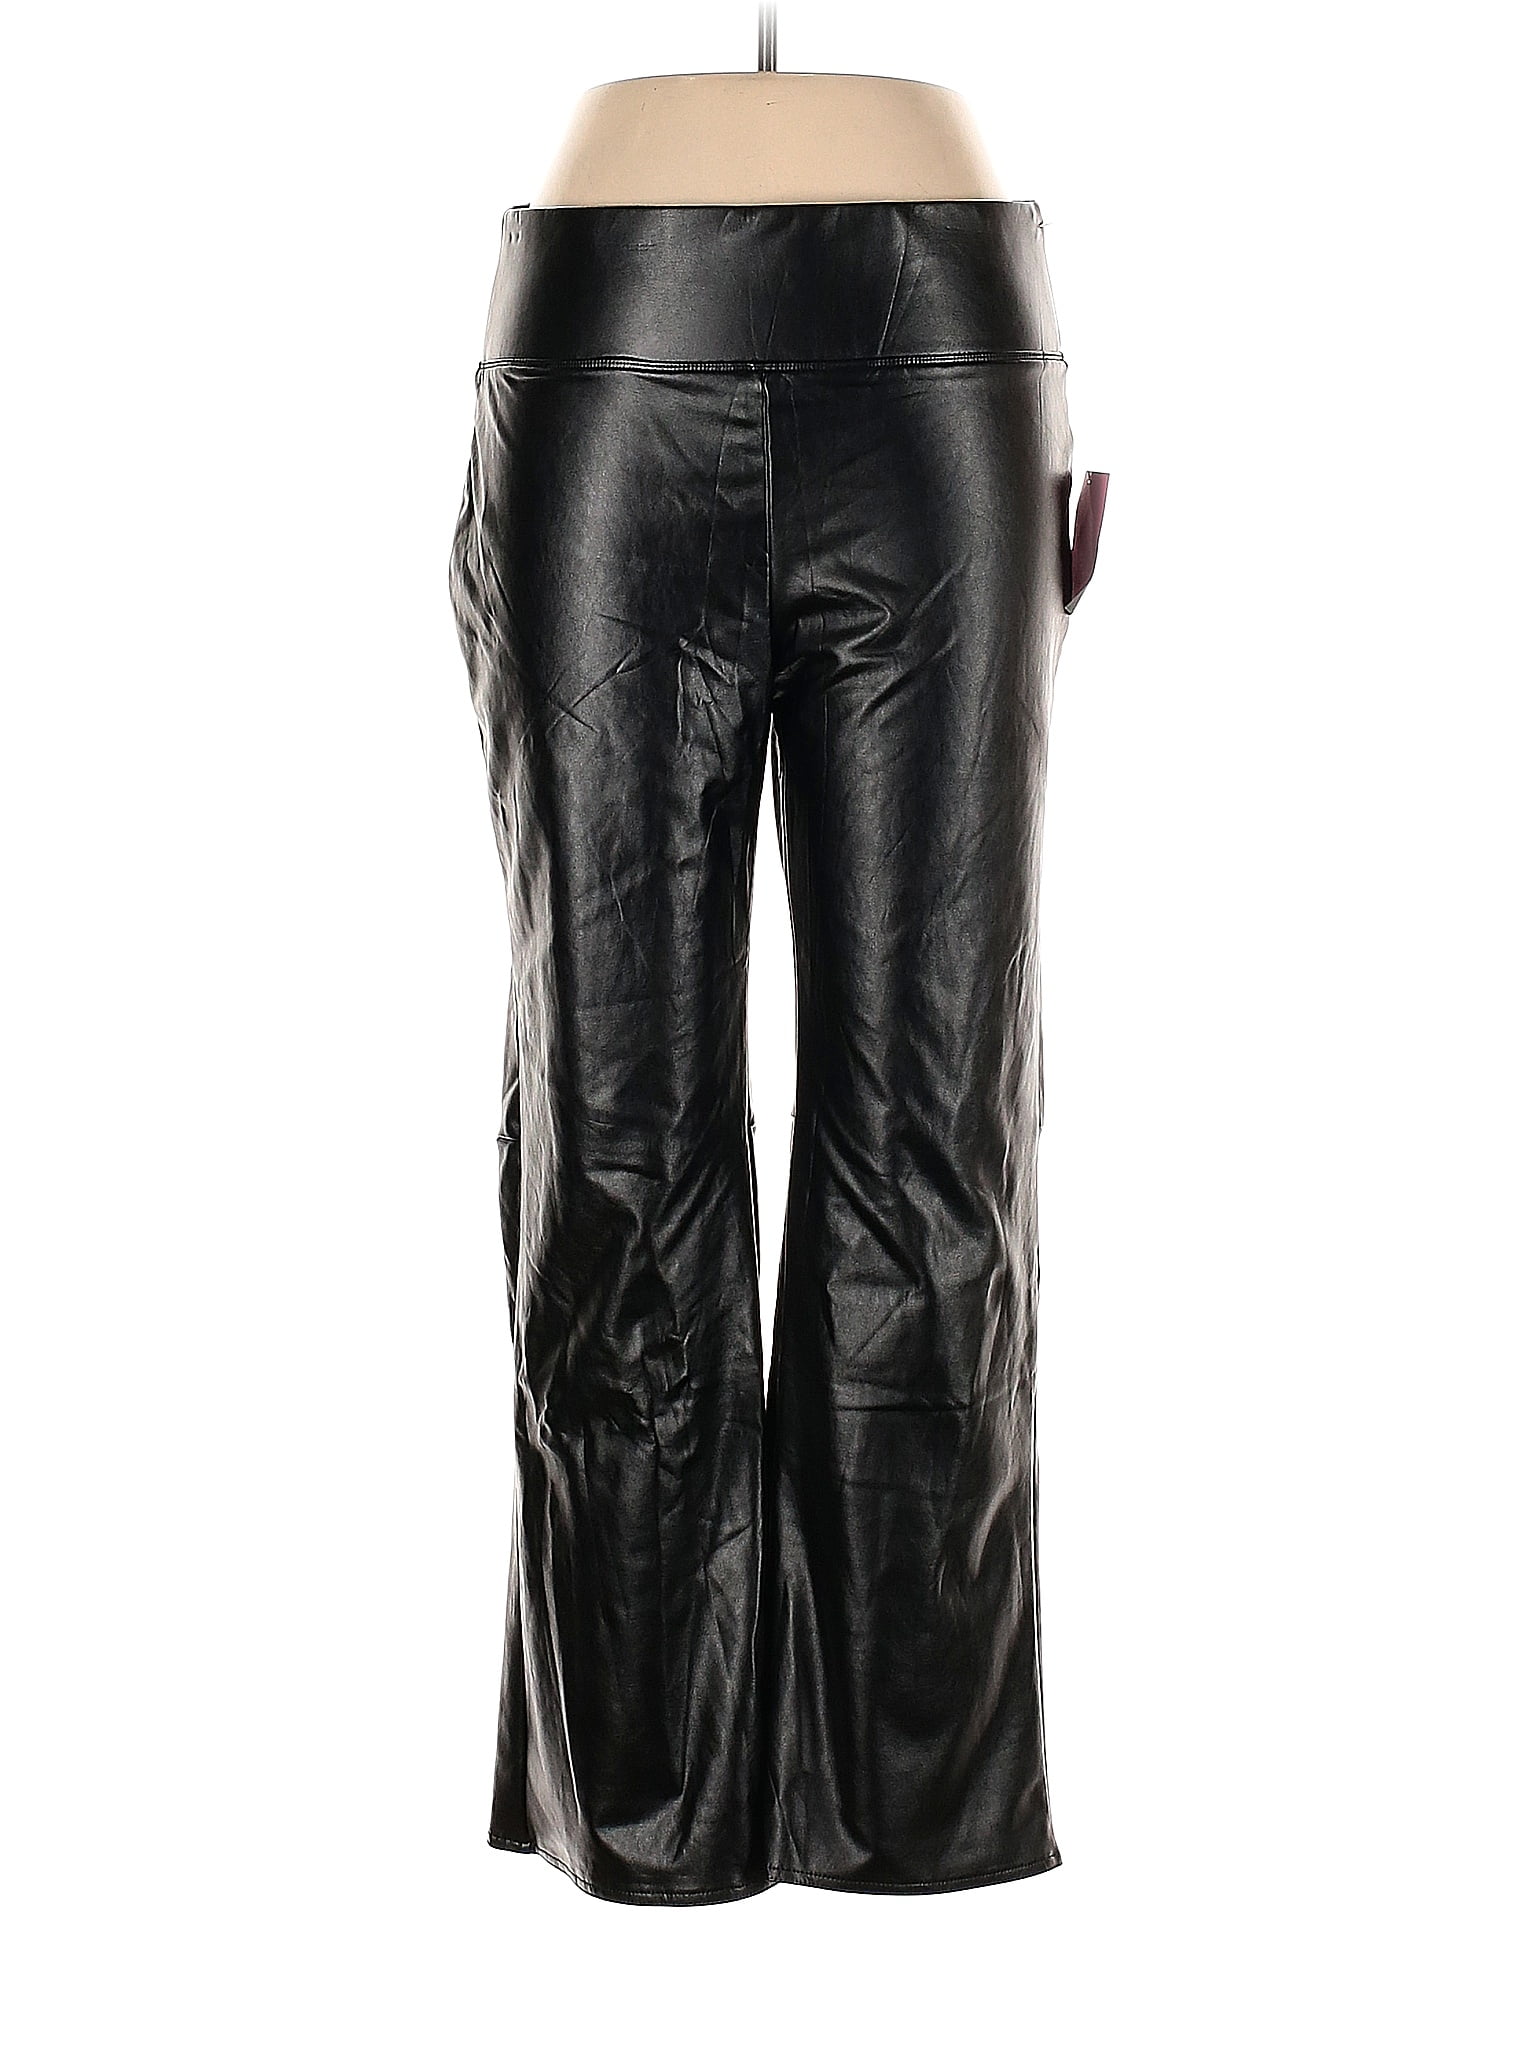 Vince Camuto Solid Black Faux Leather Pants Size L - 69% off | thredUP